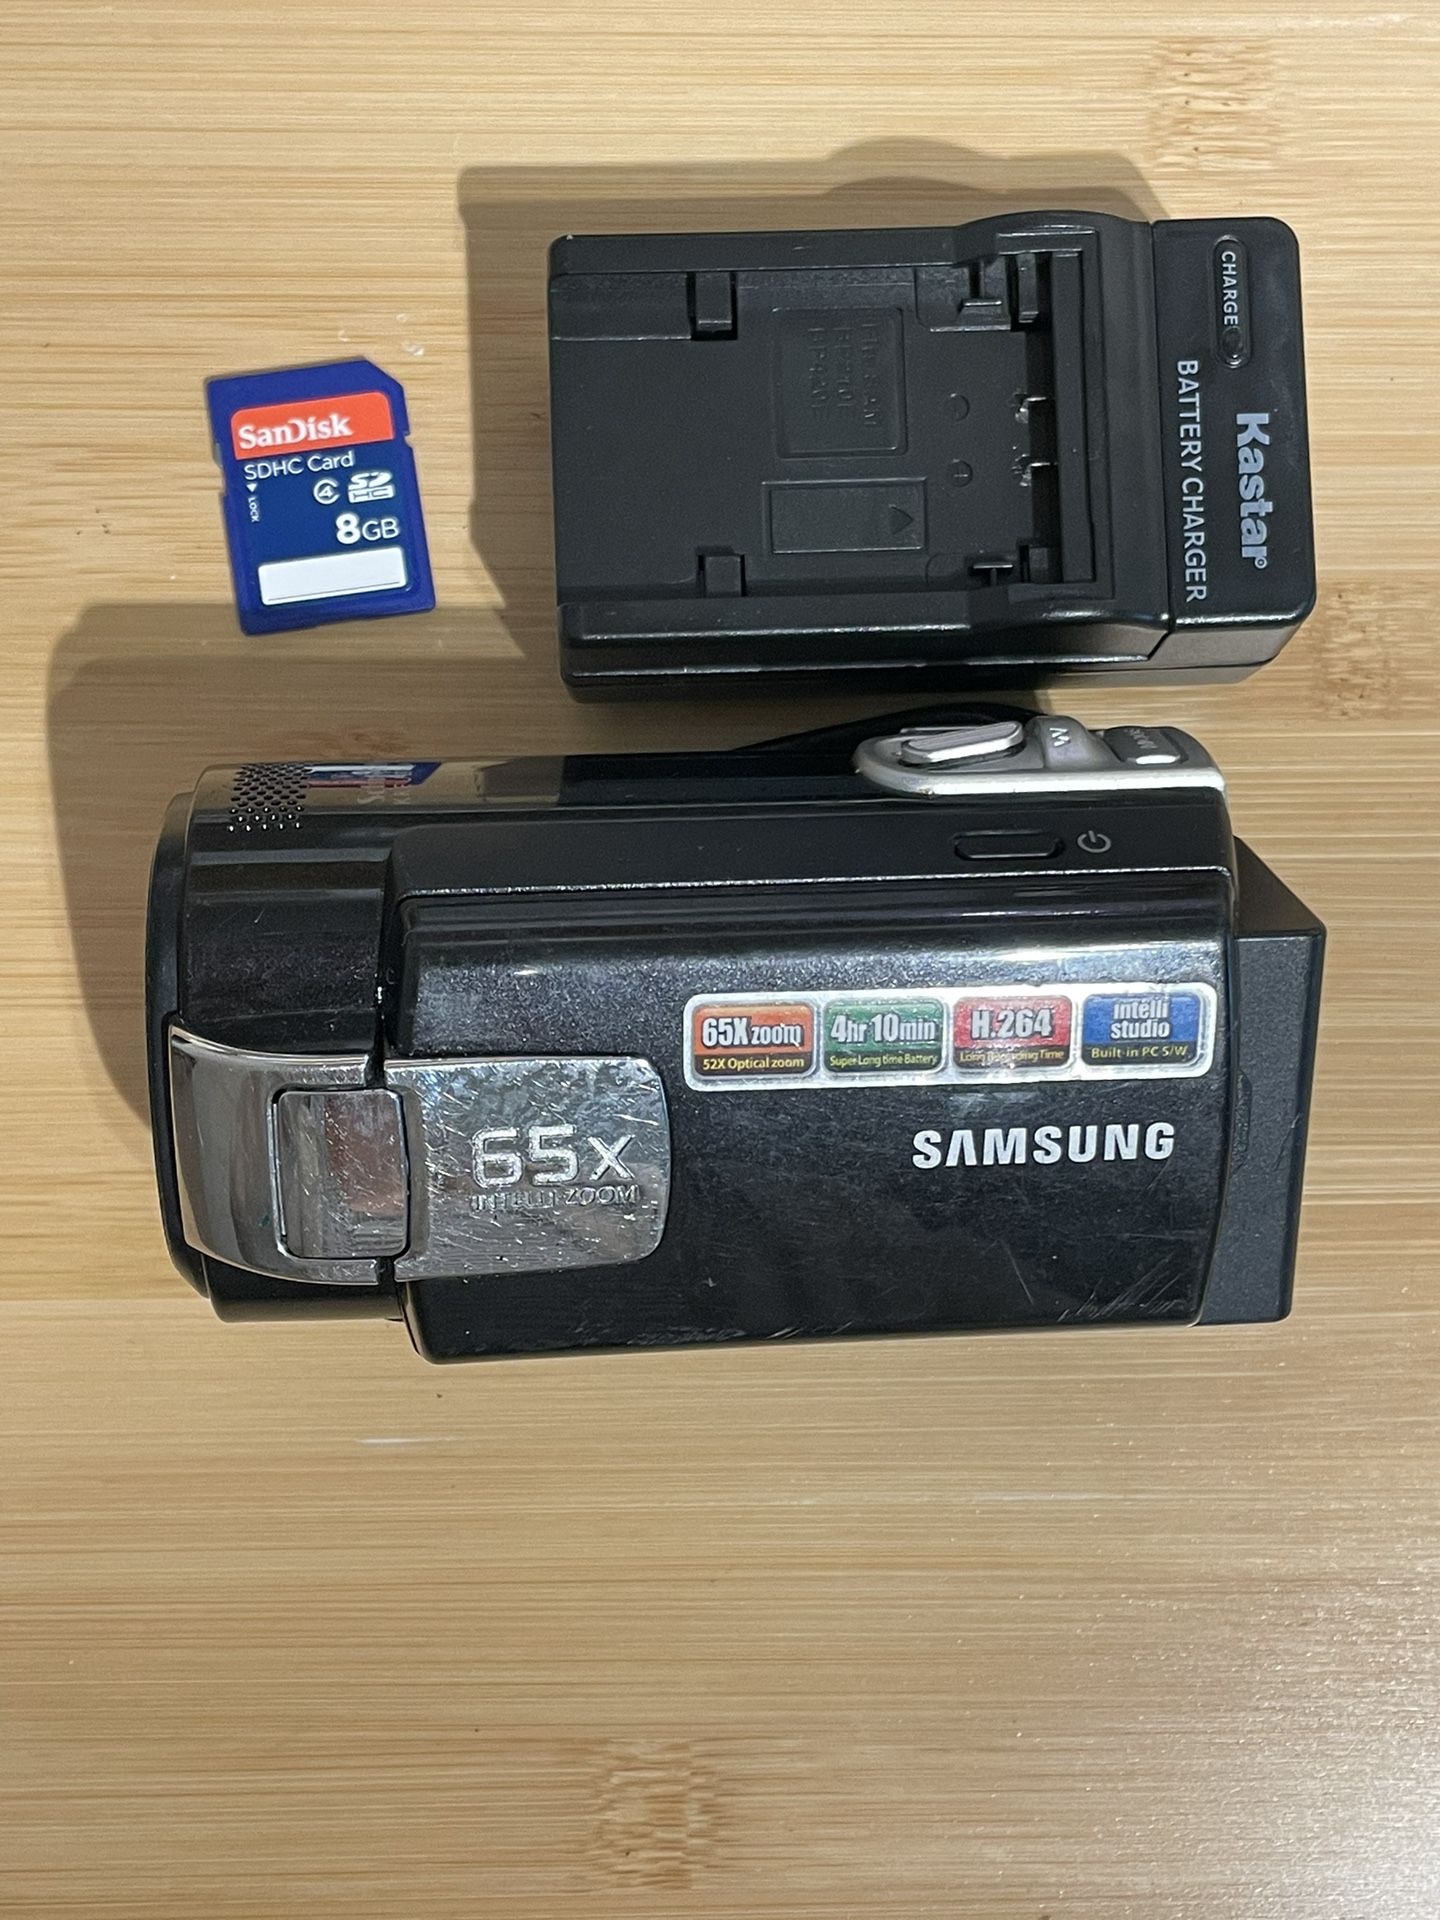 Samsung SMX-F40BN/XAA Digital Camcorder Tested Works